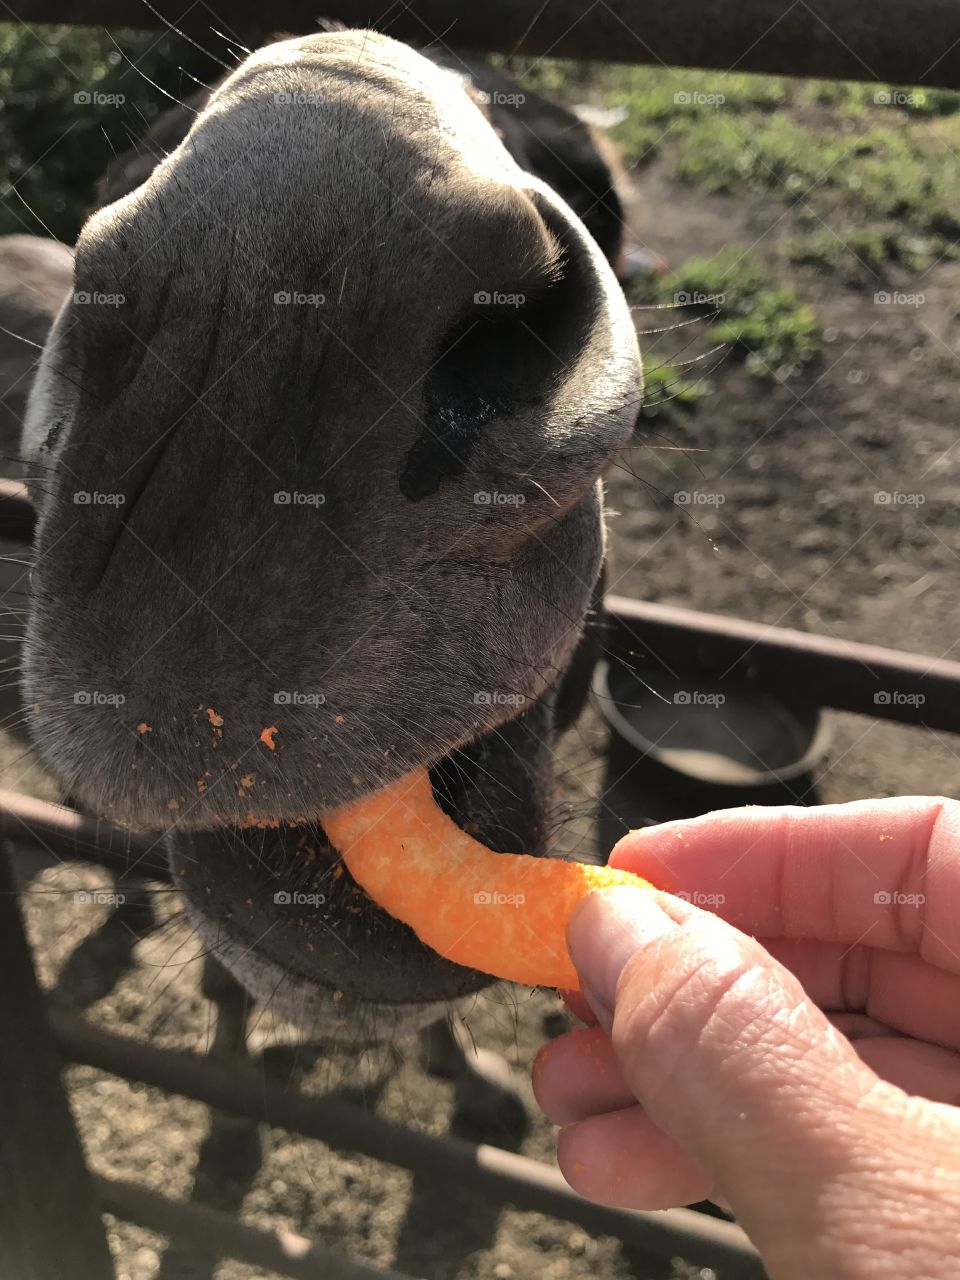 Donkeys like Cheetos too!